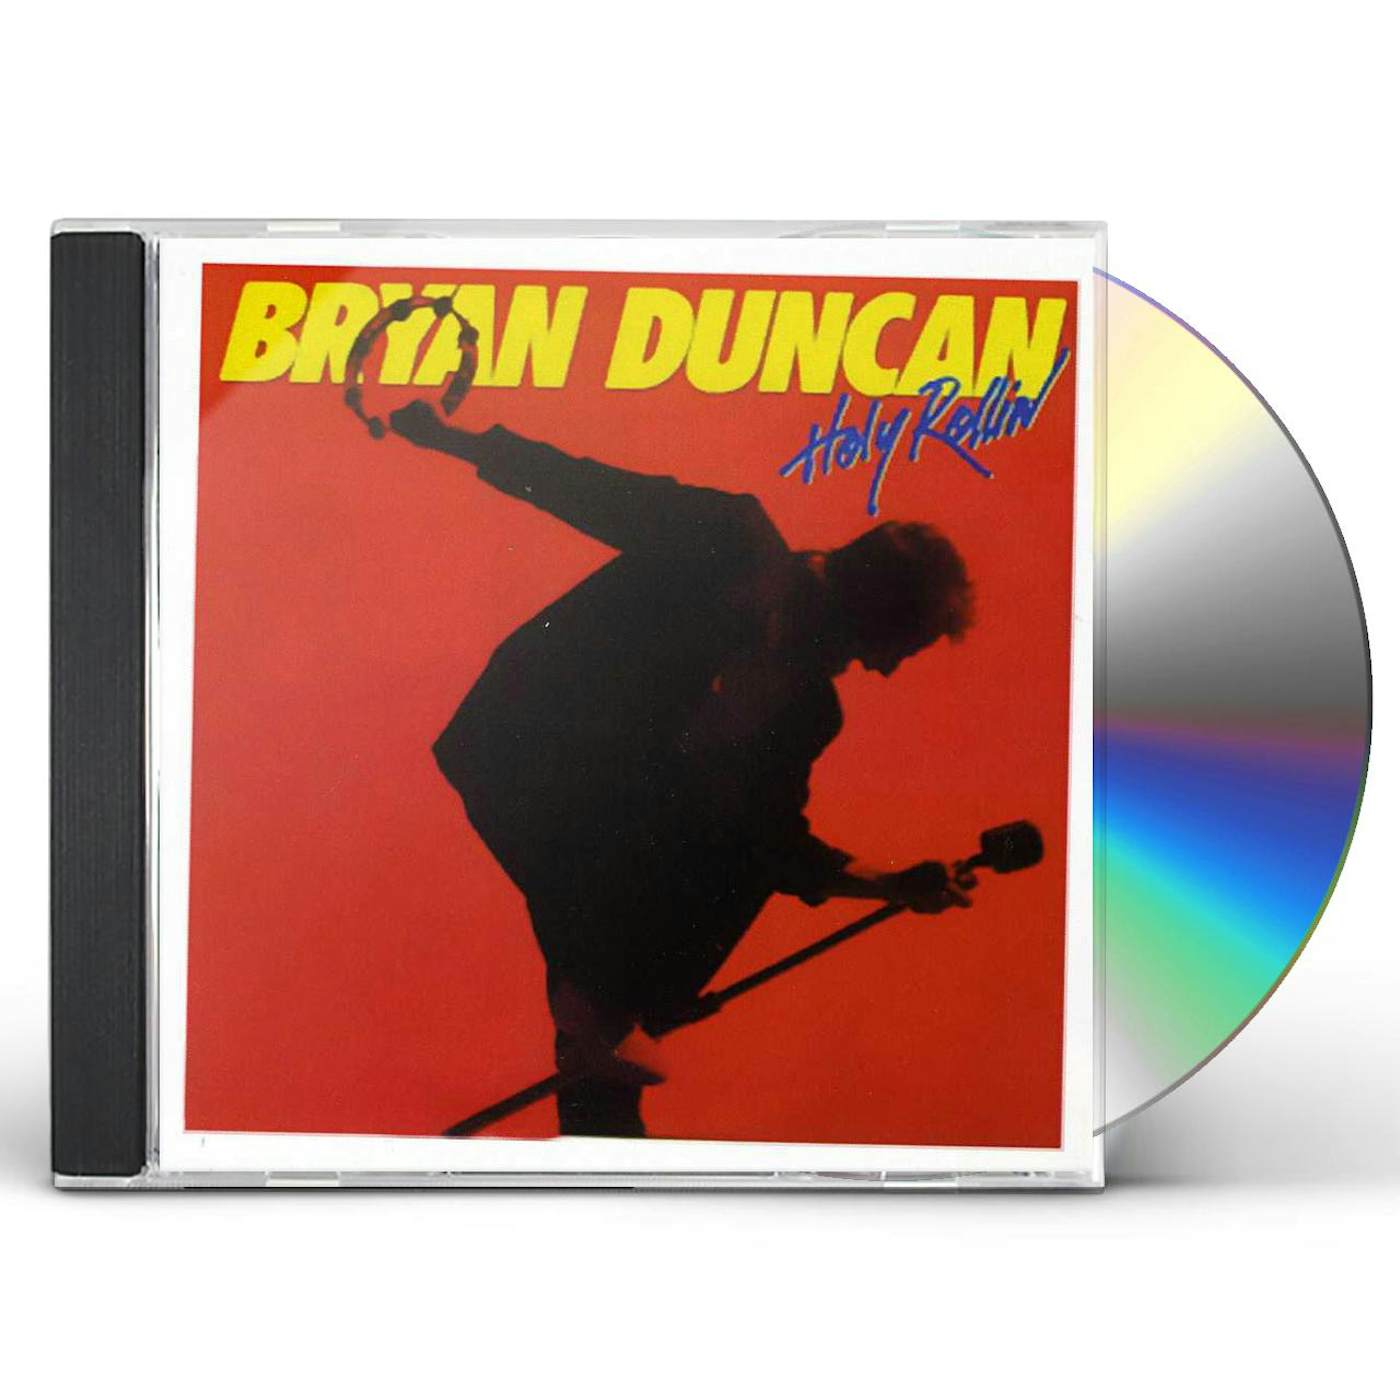 Bryan Duncan HOLY ROLLIN CD